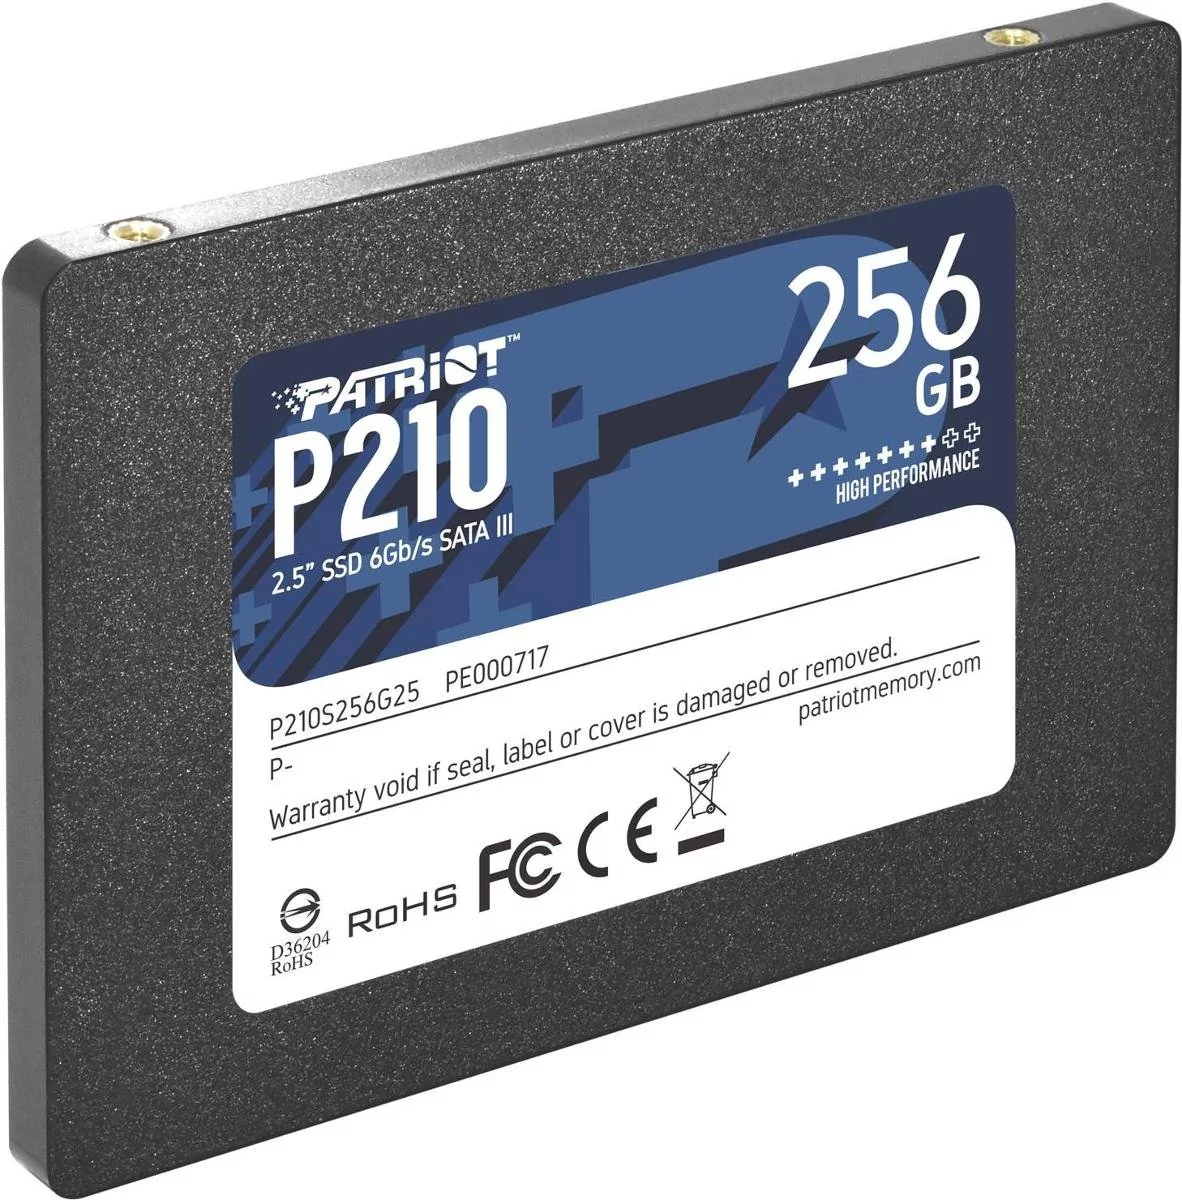 SSD|PATRIOT|P210|256GB|SATA 3.0|Write speed 400 MBytes/sec|Read speed 500 MBytes/sec|2,5"|TBW 120 TB|P210S256G25